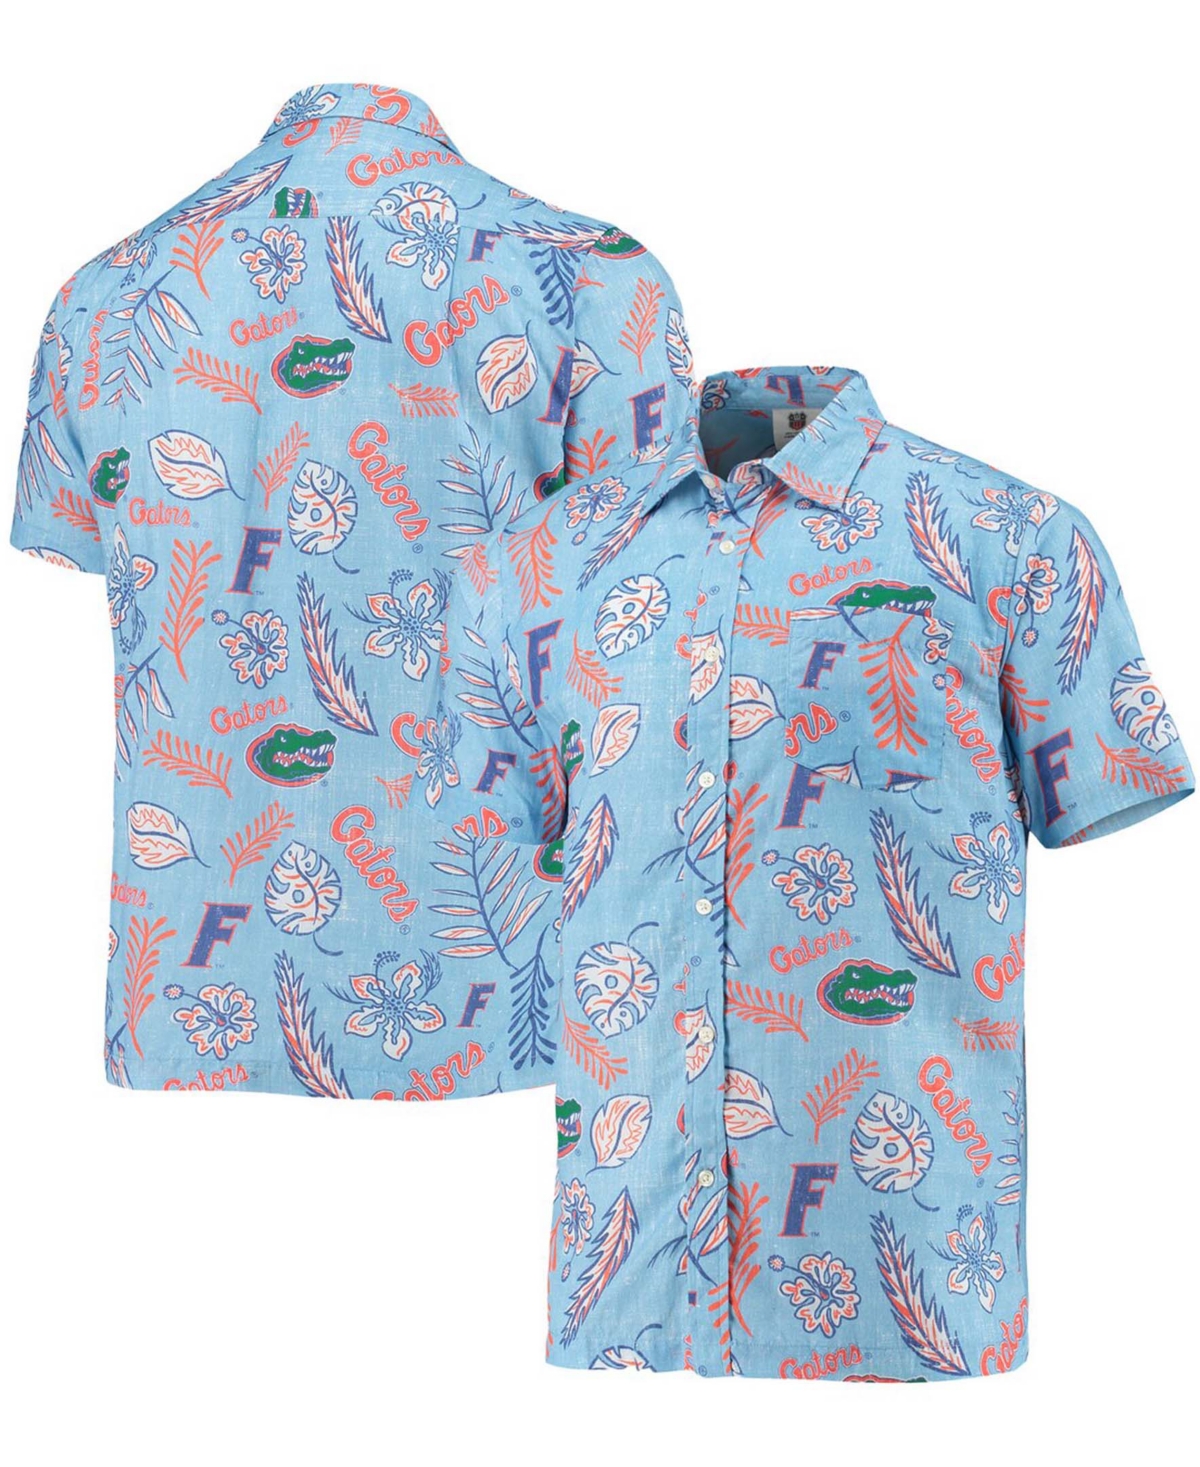 Wes & Willy Men's Light Blue Florida Gators Vintage-like Floral Button-up Shirt